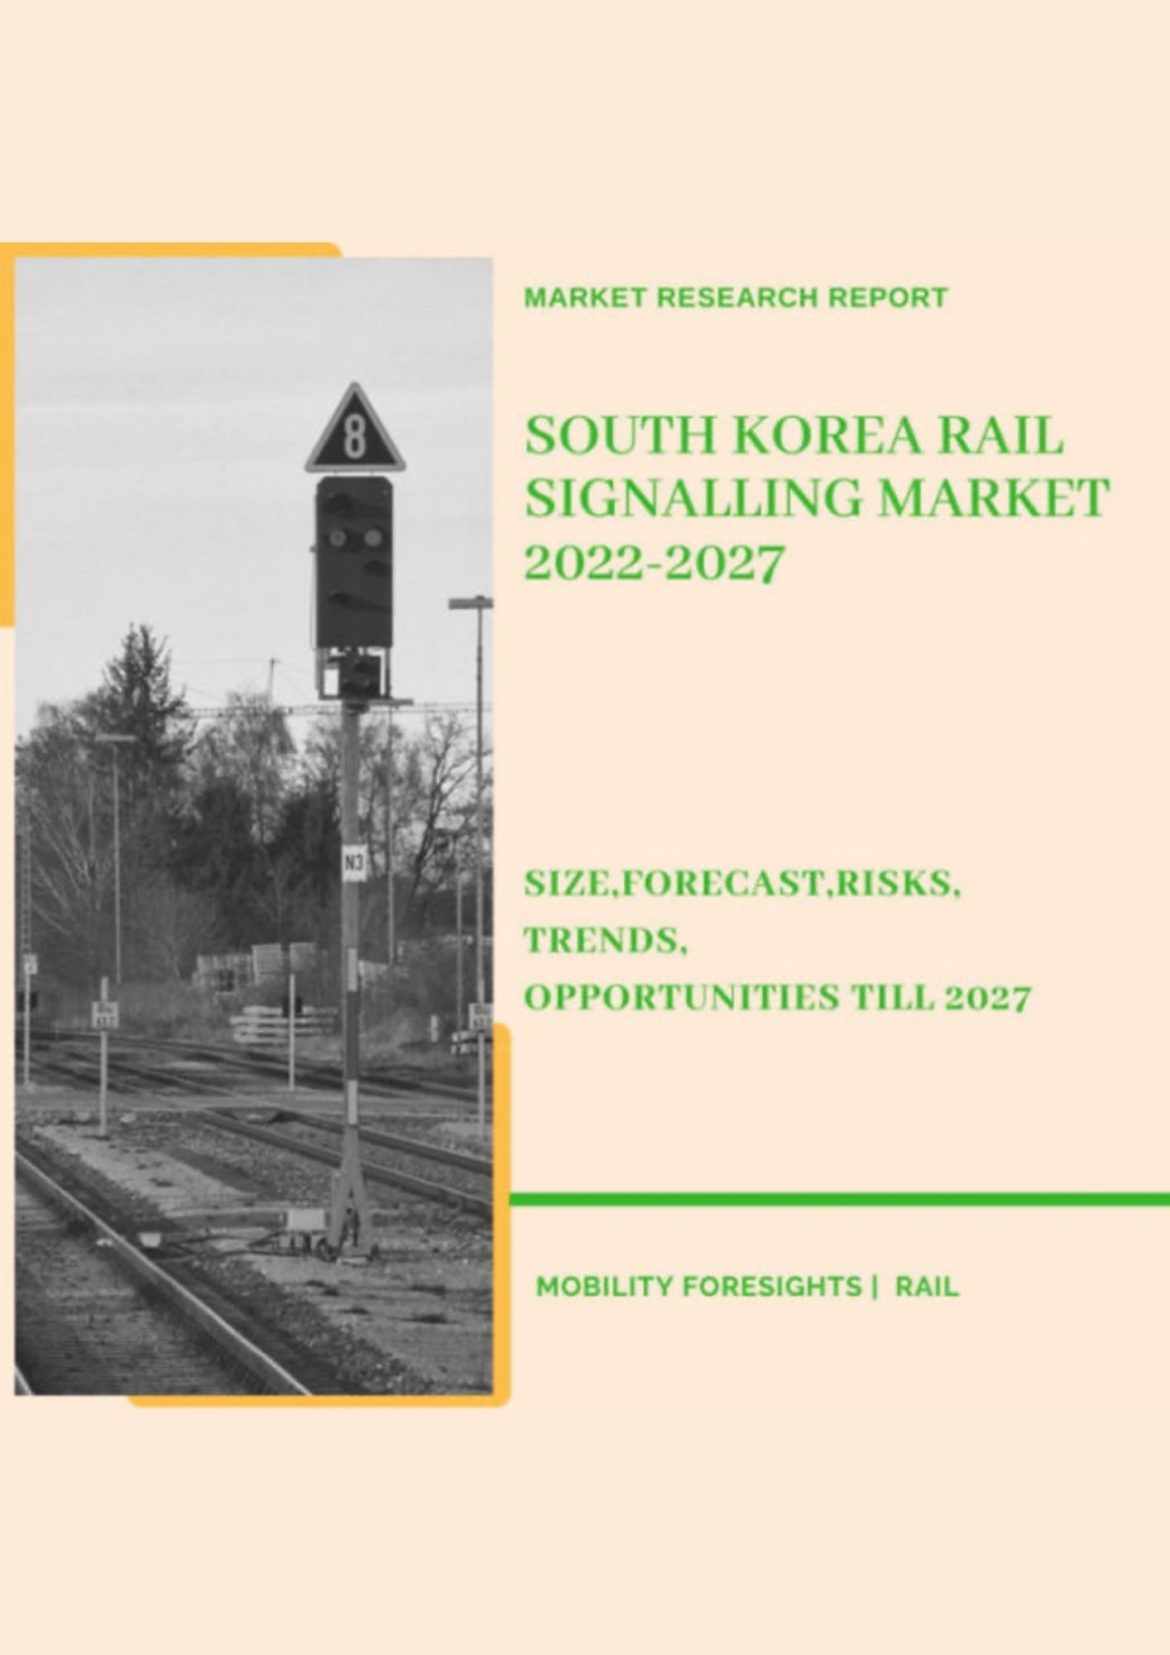 South Korea Rail Signalling Market 2022-2027